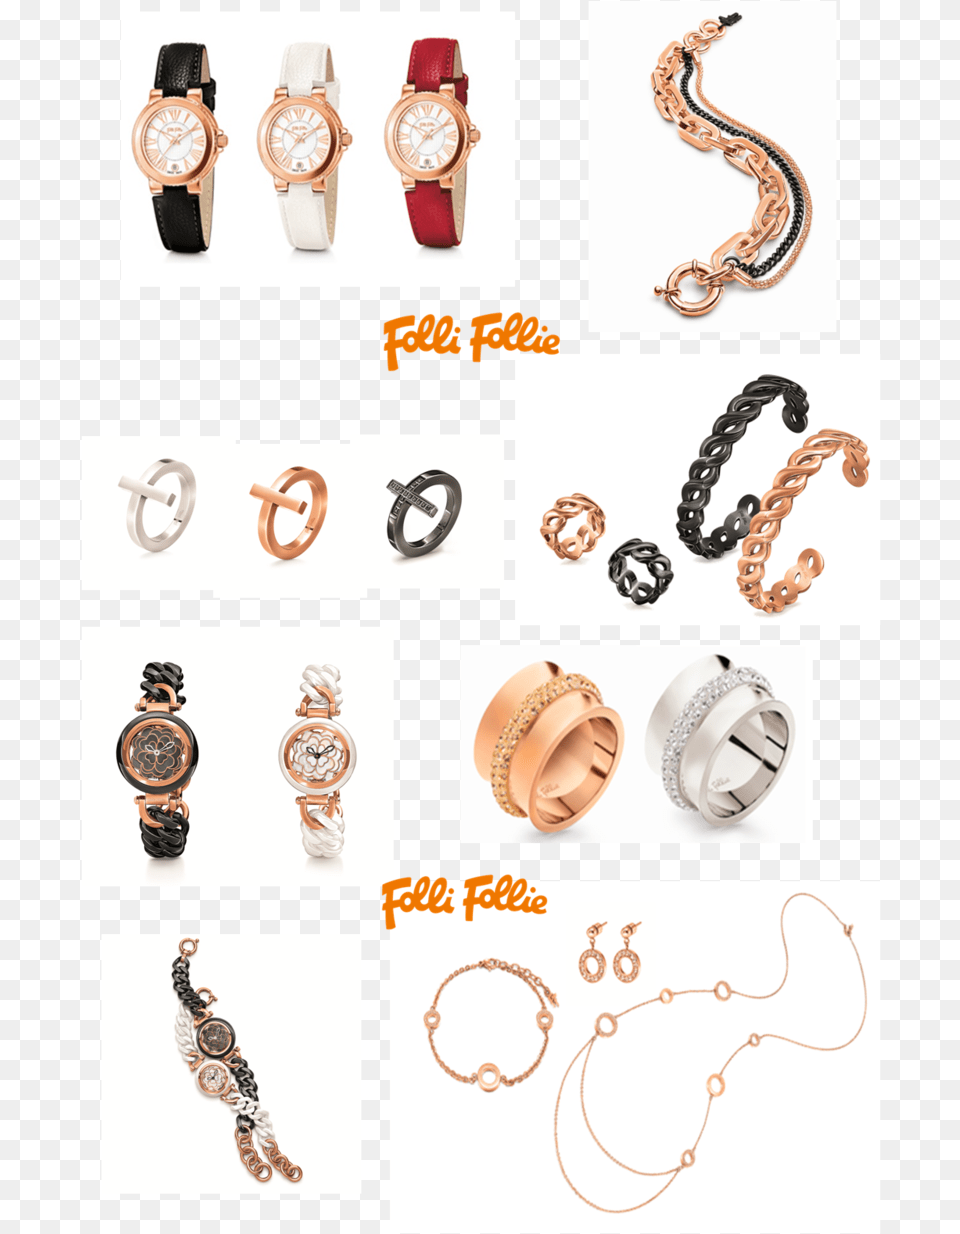 Vdvcjzj Python Family, Accessories, Wristwatch, Jewelry, Necklace Png